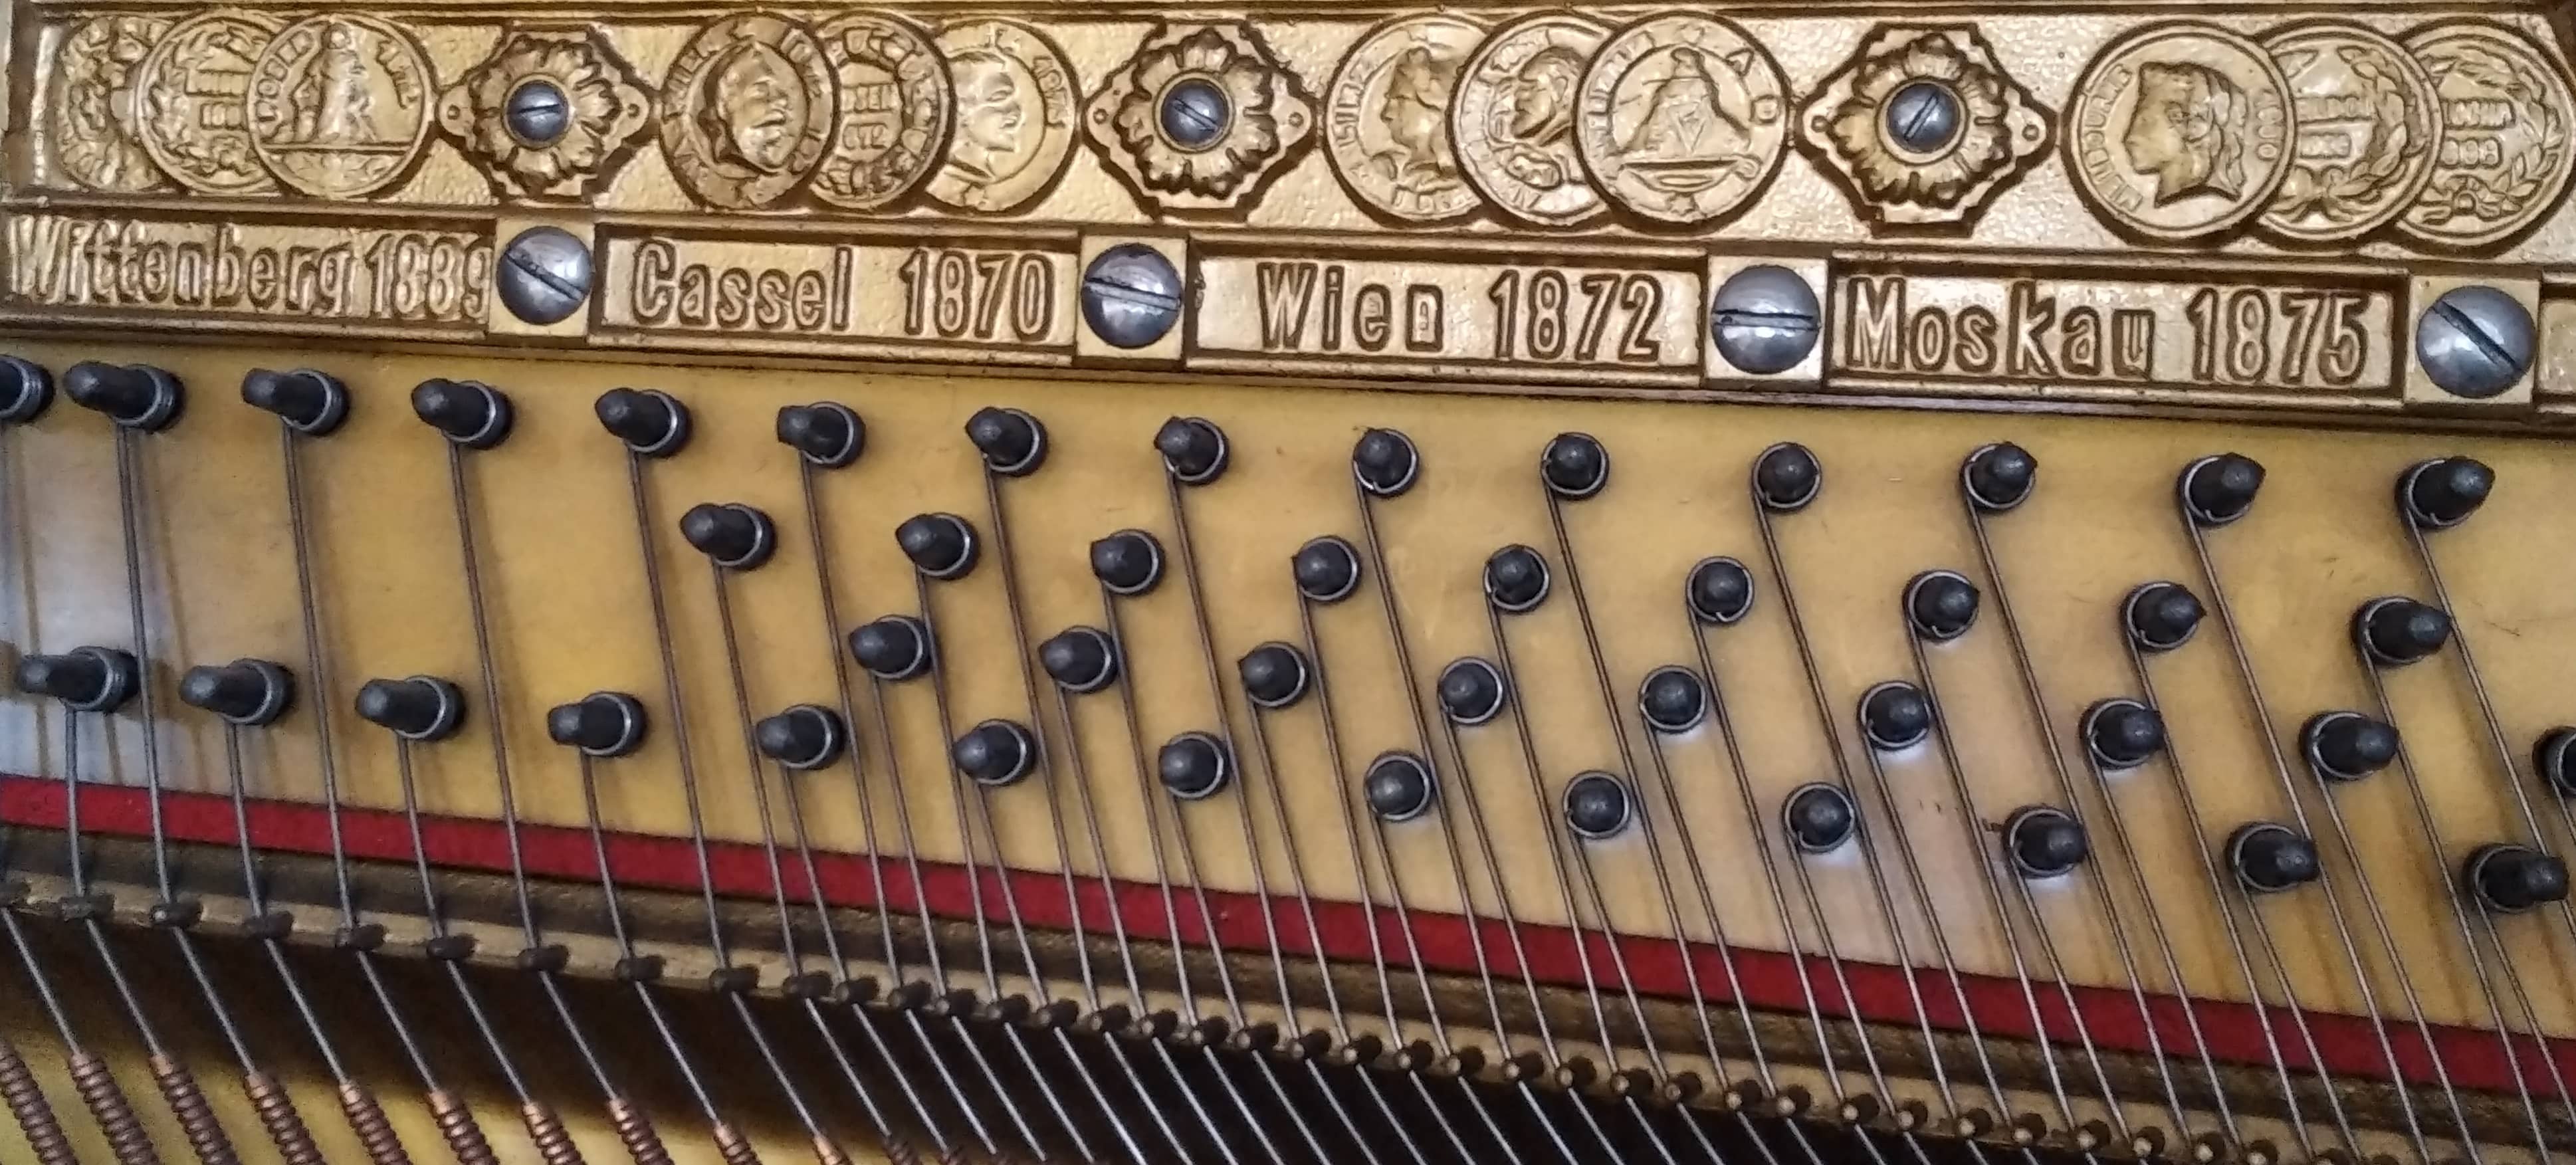 chevilles d'un piano Seiler ancien splendide